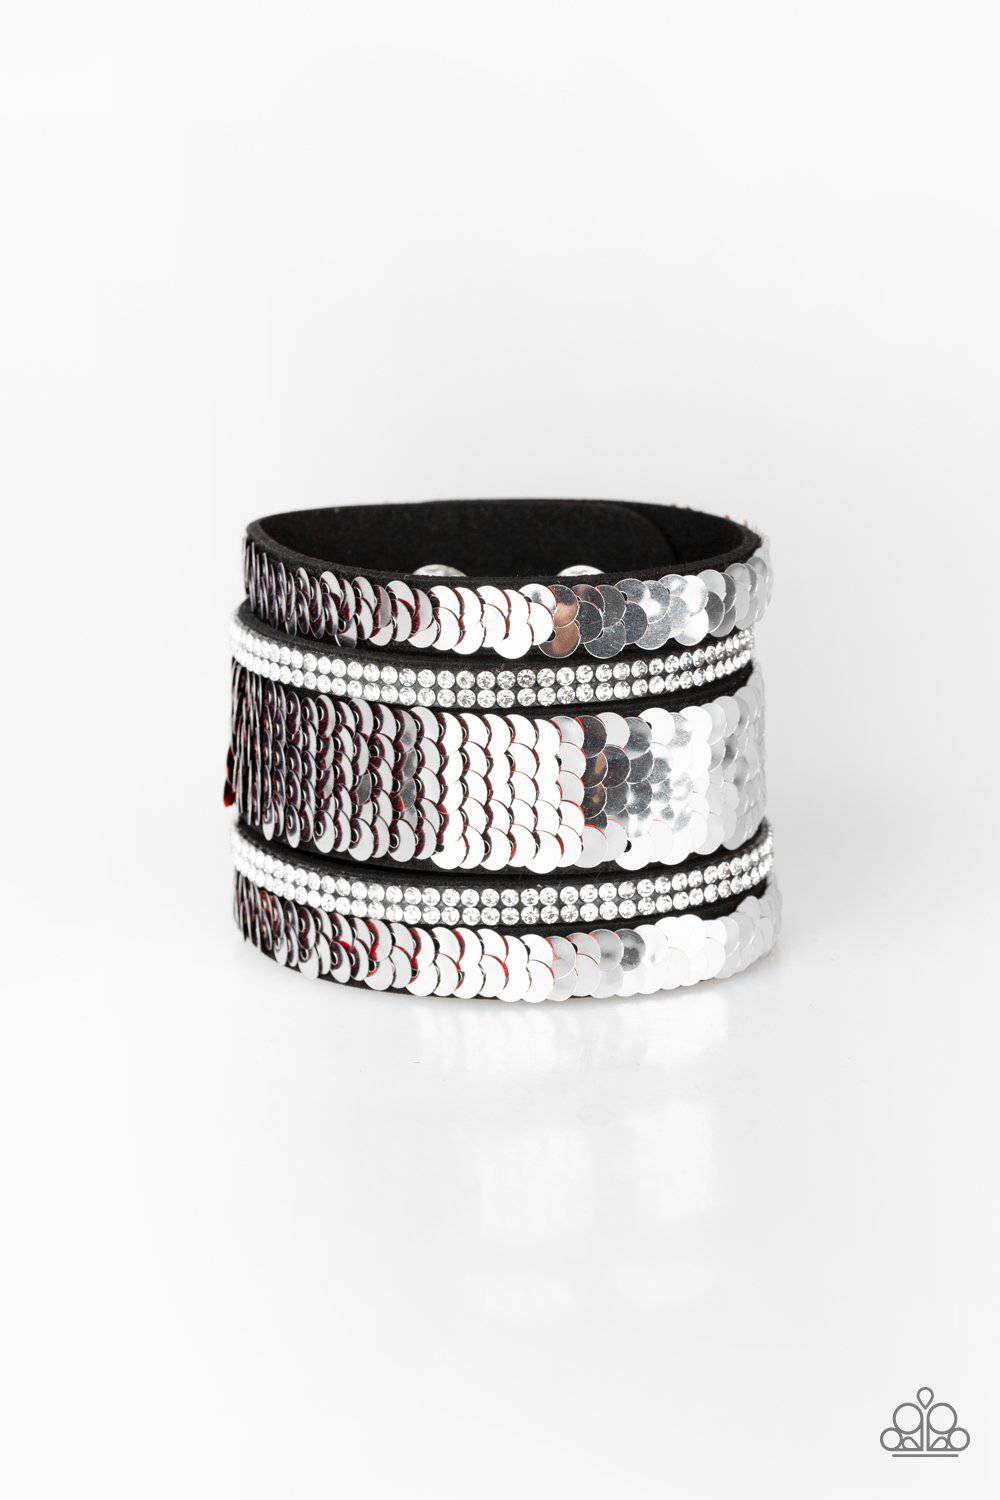 MERMAID Service - Red & Silver Mermaid Bracelet - Paparazzi Accessories - GlaMarous Titi Jewels